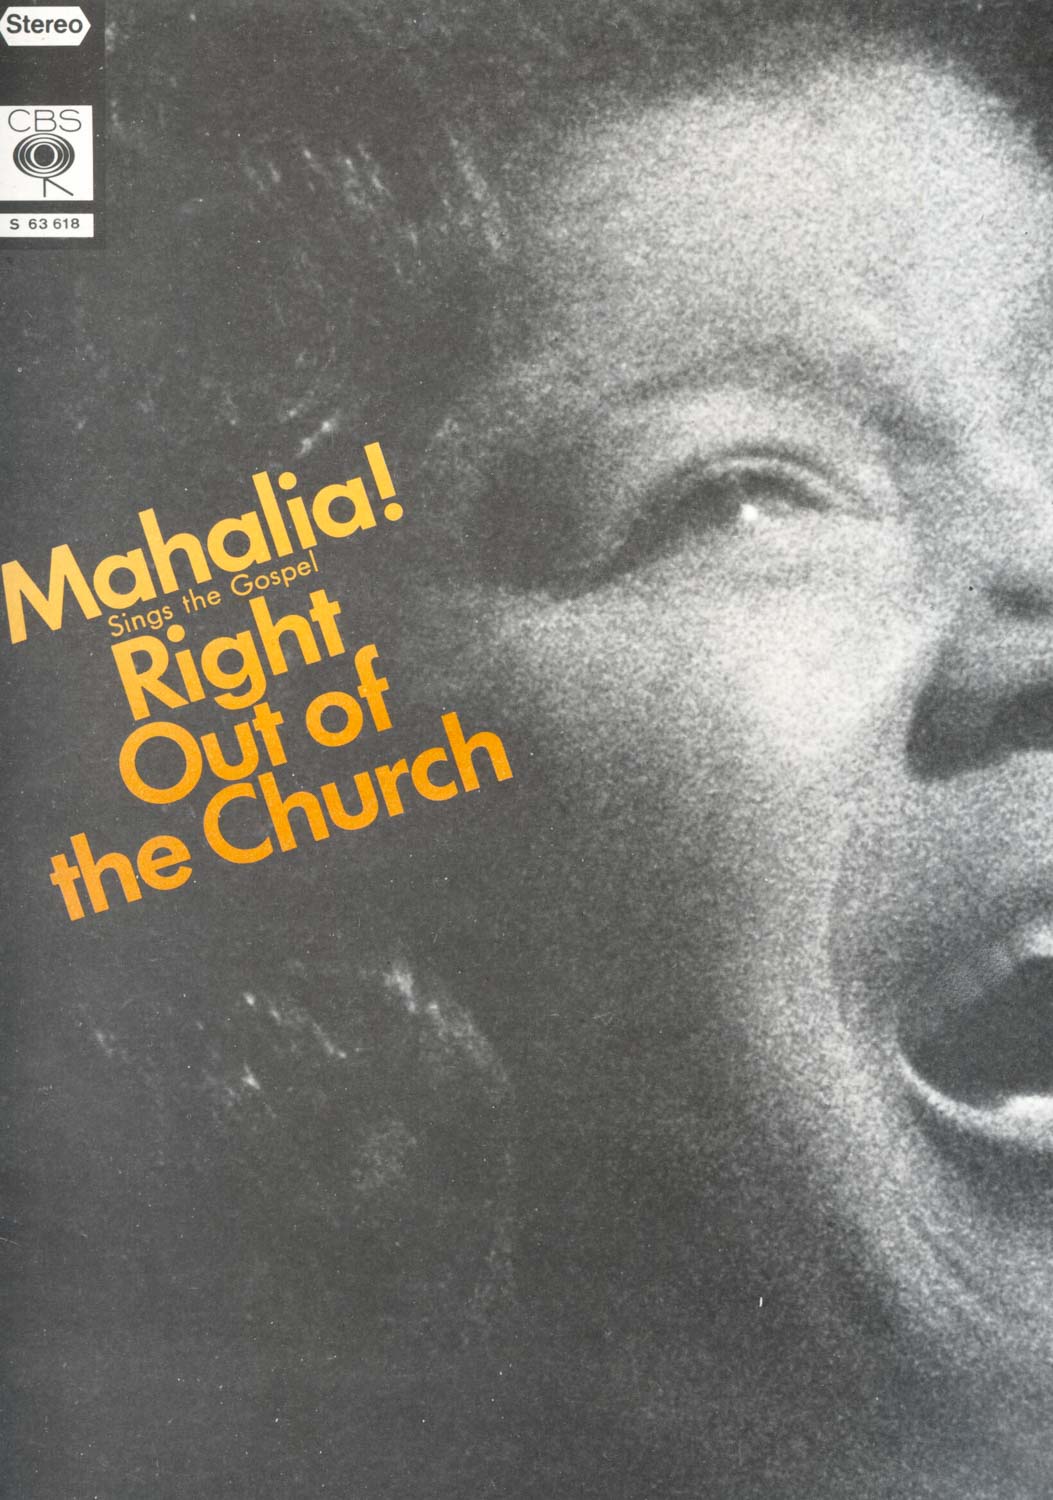 Mahalia Jackson  Mahalia! Sings the Gospel Right out of the Church (S 63 618)  *LP 12'' (Vinyl)*. 